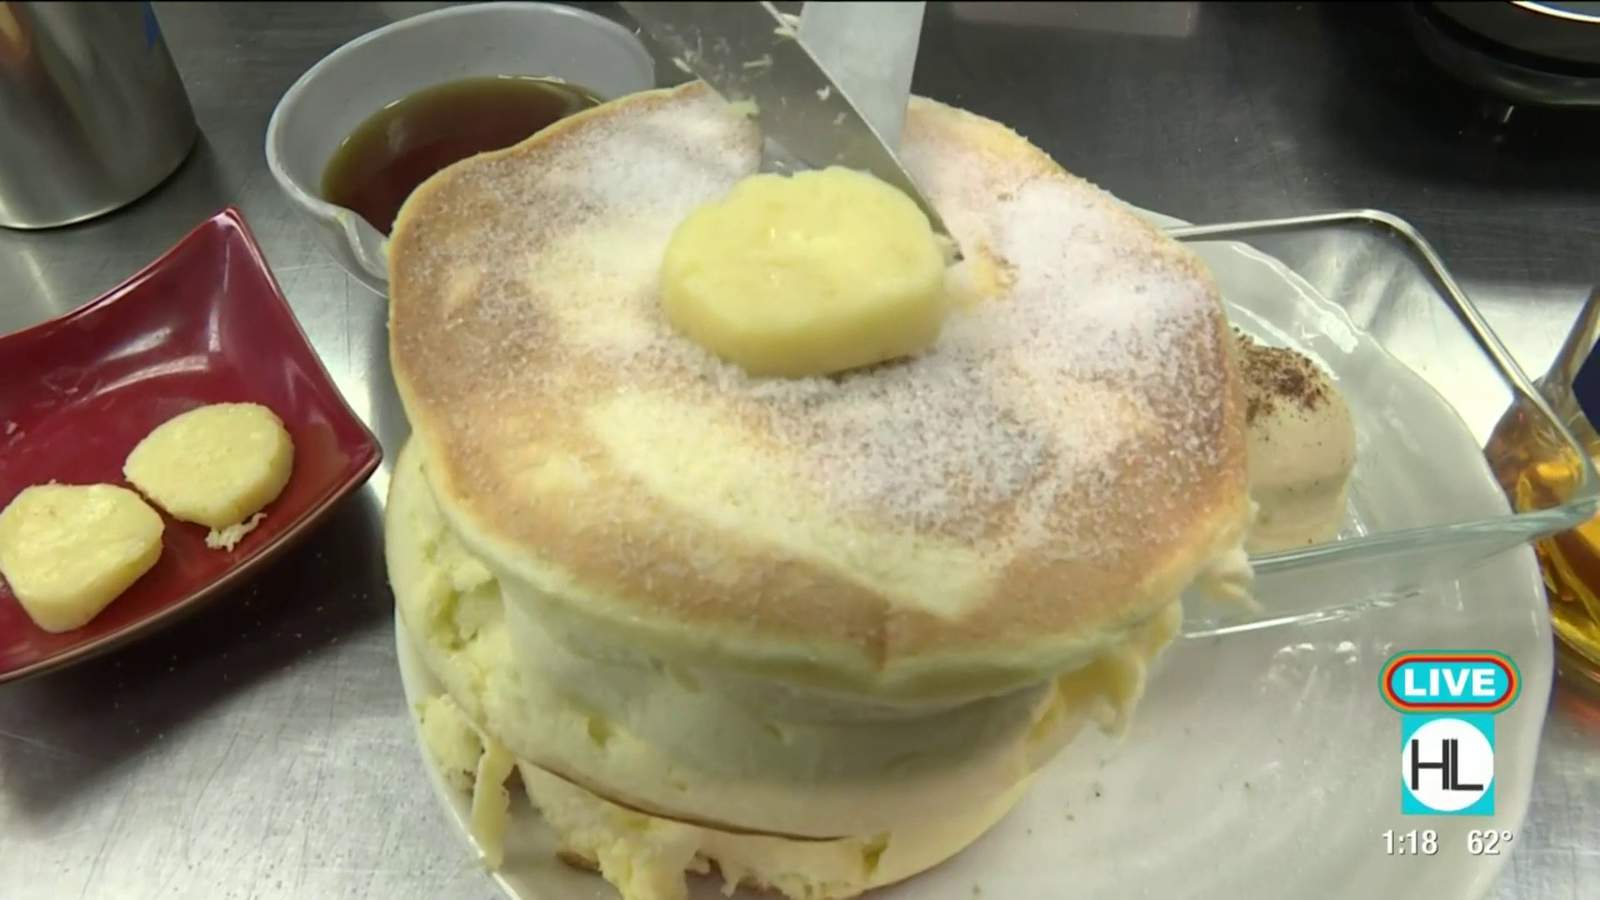 Shun Japanese Kitchen makes popular fluffy souffle pancakes